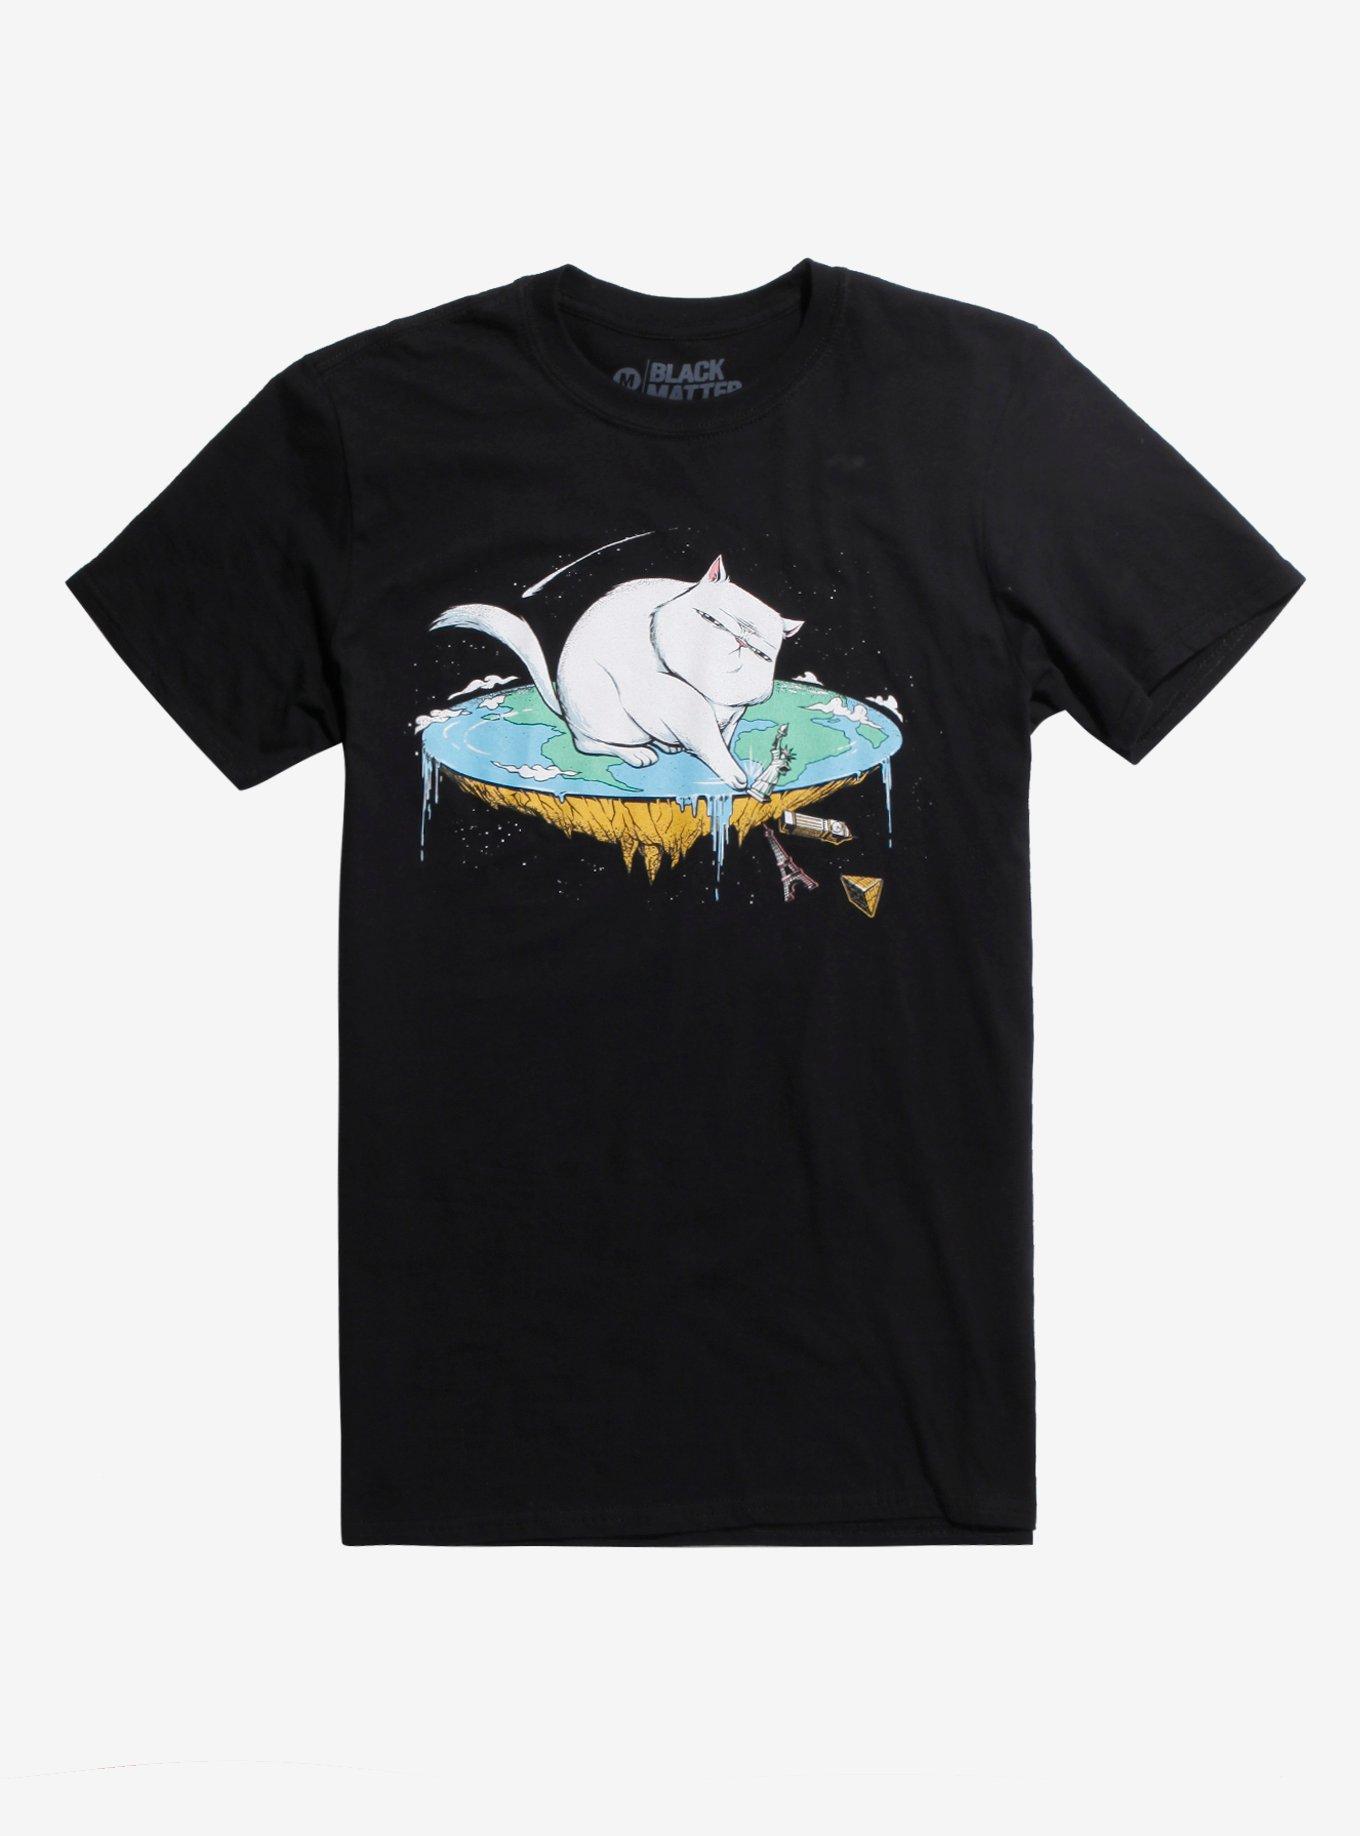 Flat Earth T-Shirt | Hot Topic